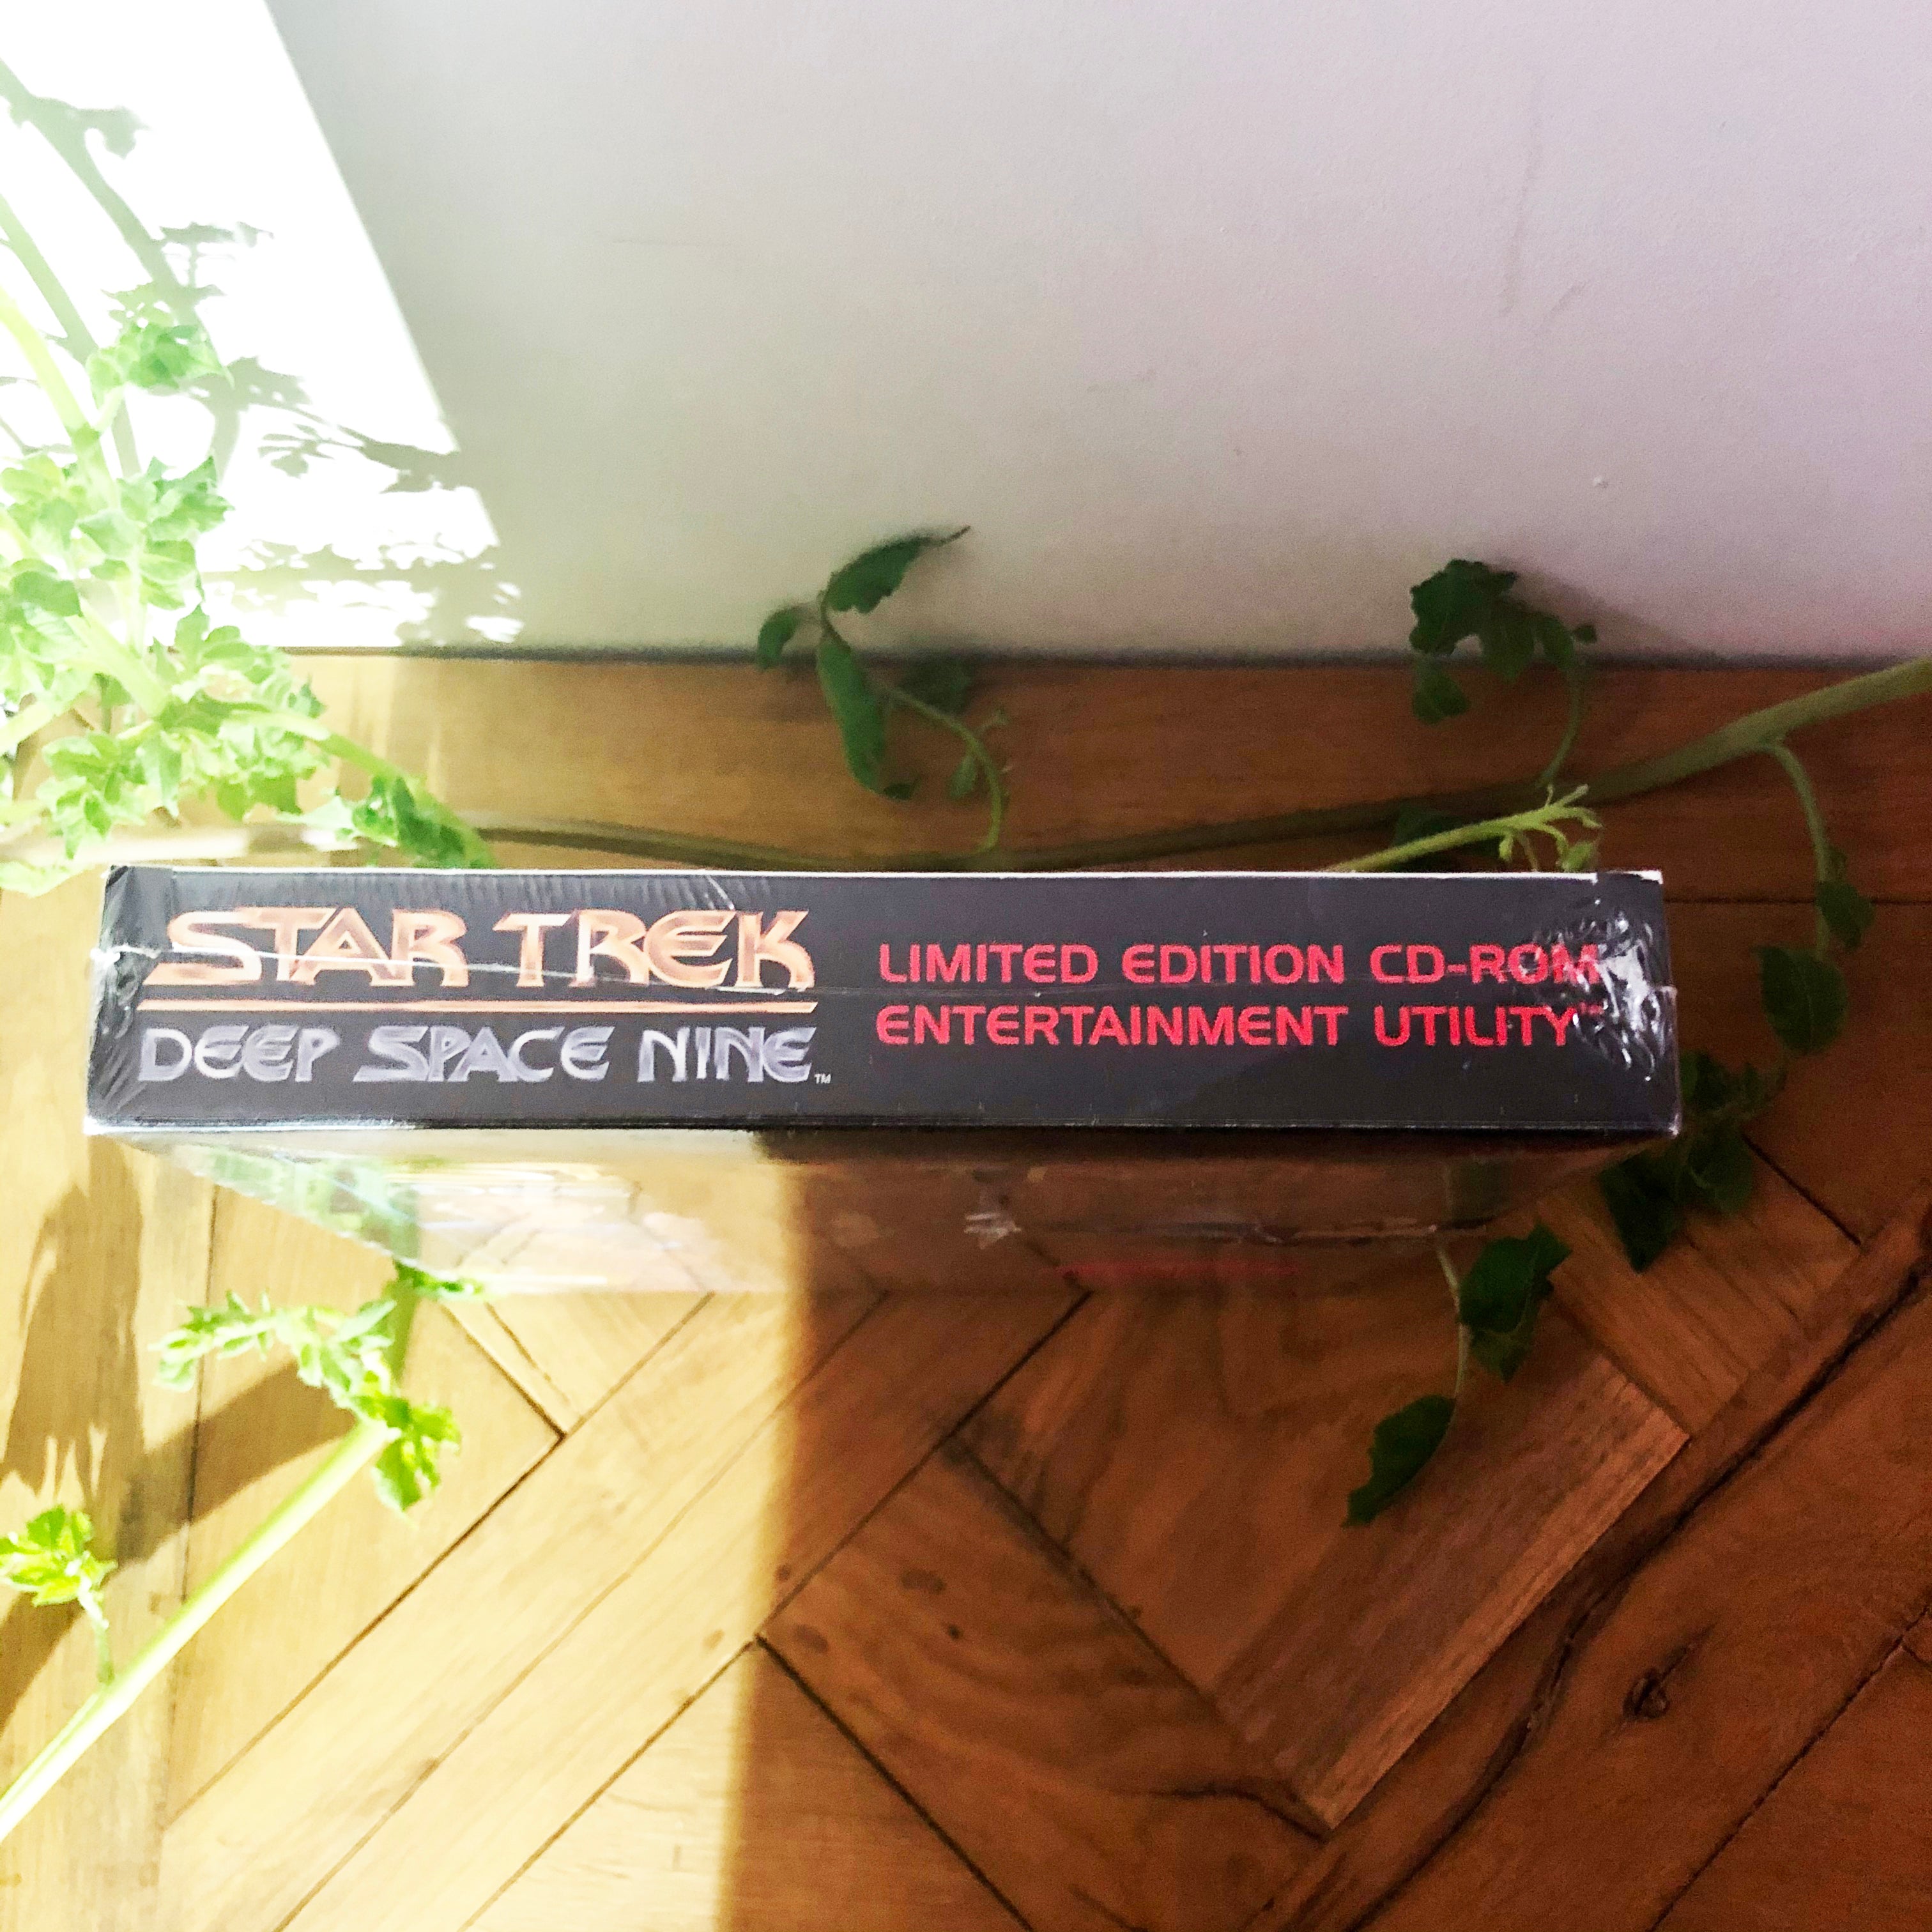 1996 Star Trek Deep Space Nine. CD Entertainment Utility, Limited Edition.